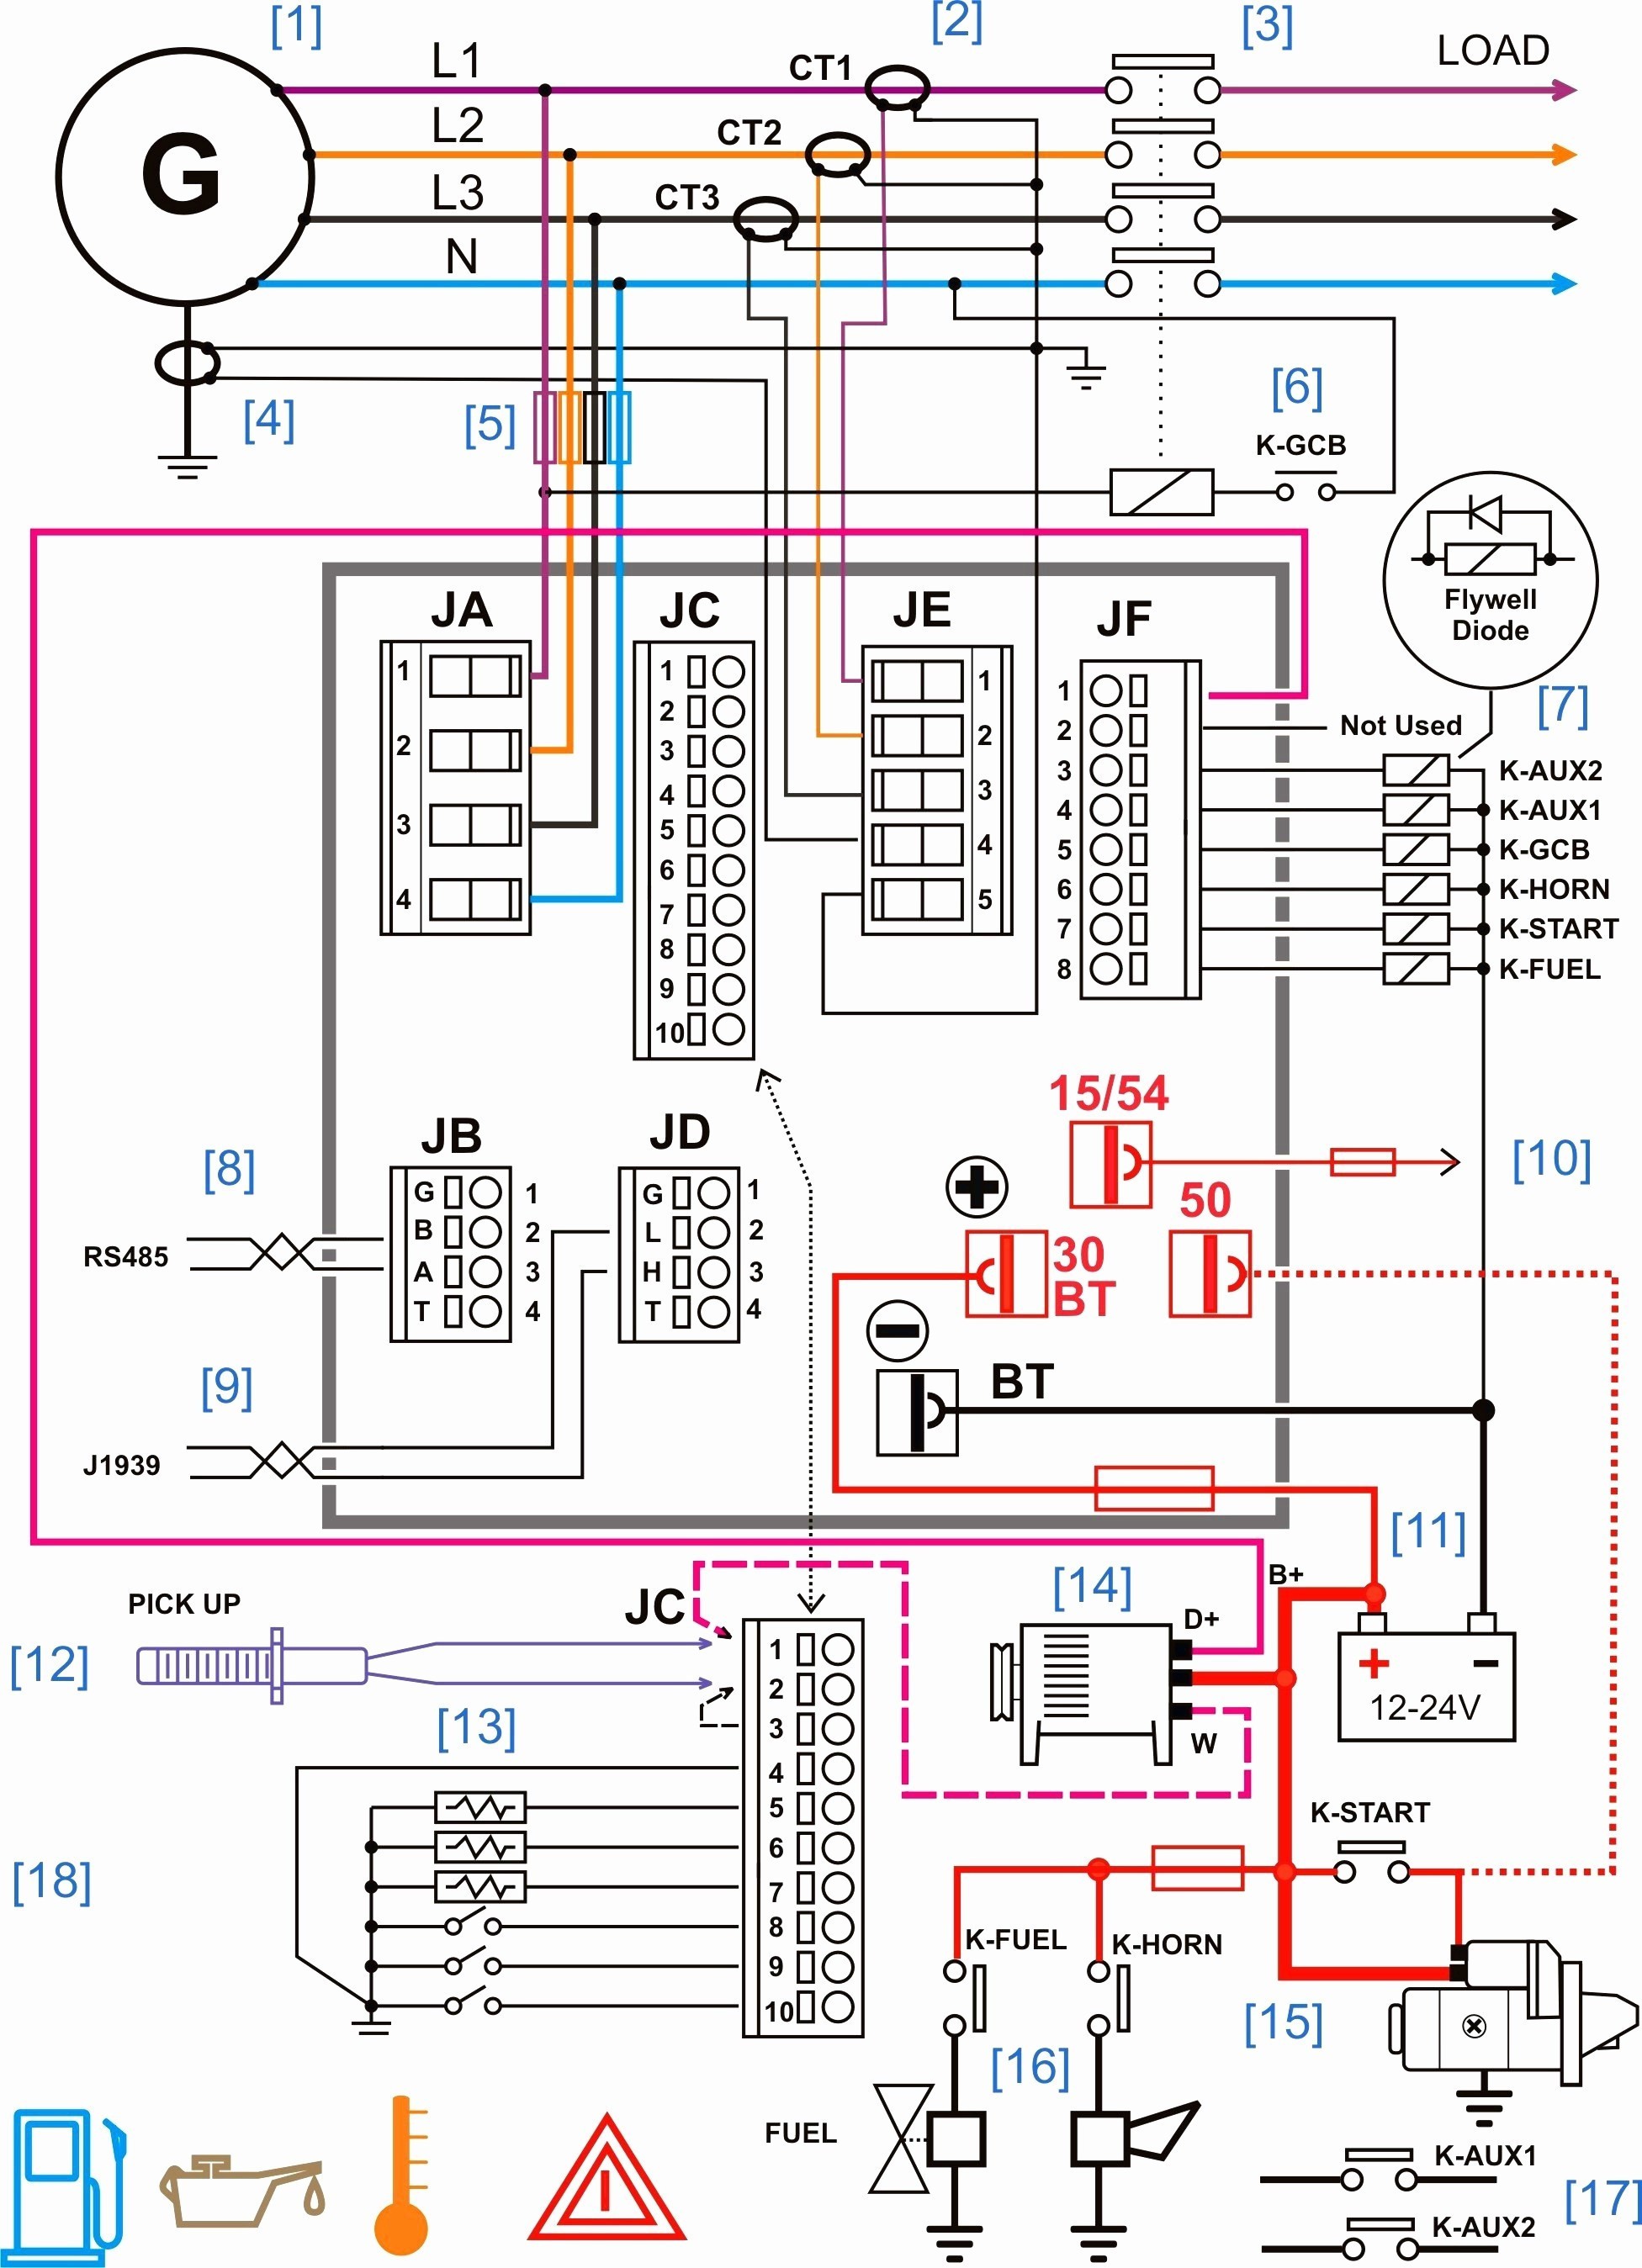 Car Electrical Wiring Diagrams Electrical Wiring Diagram Line Save Automotive Wiring Diagram Line Of Car Electrical Wiring Diagrams